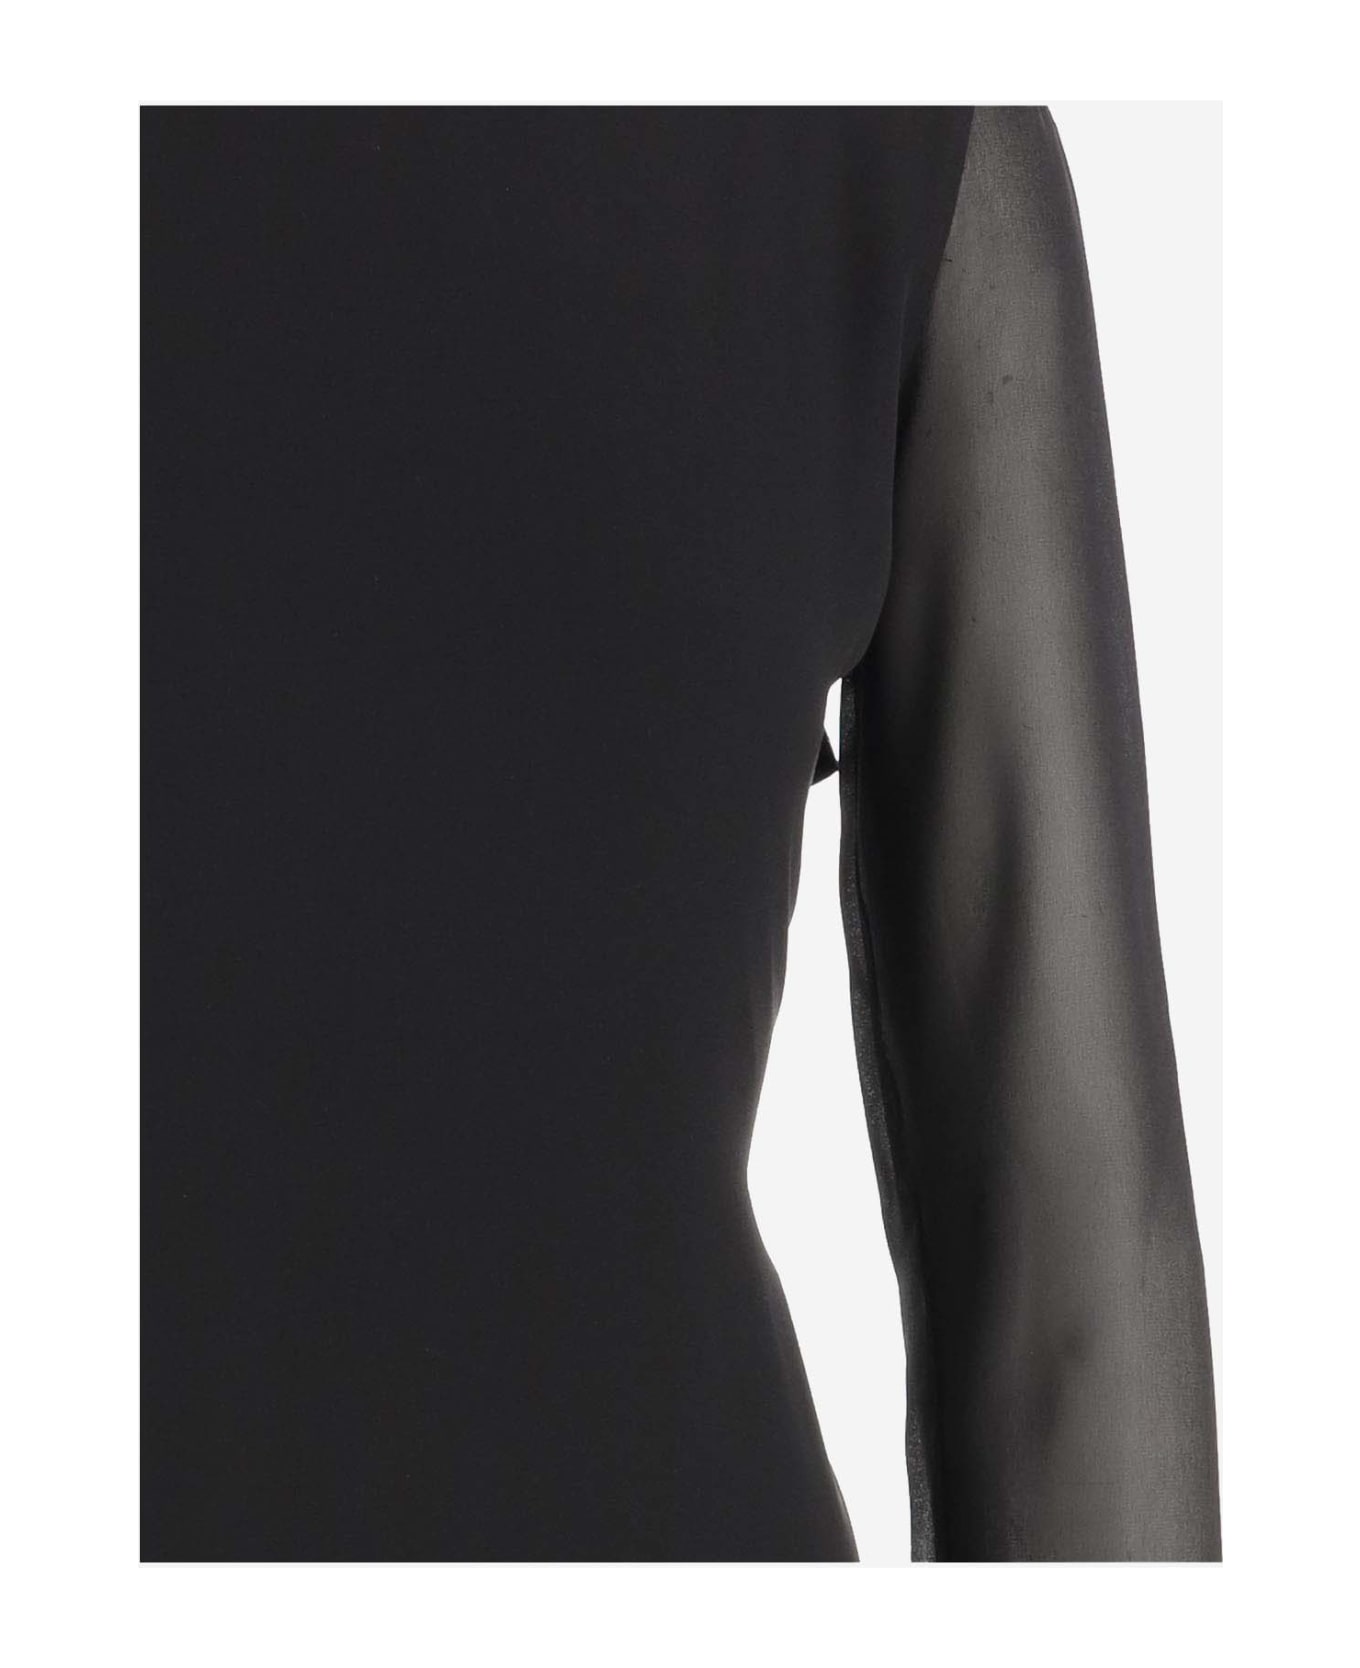 Stephan Janson Silk Long Dress - Black